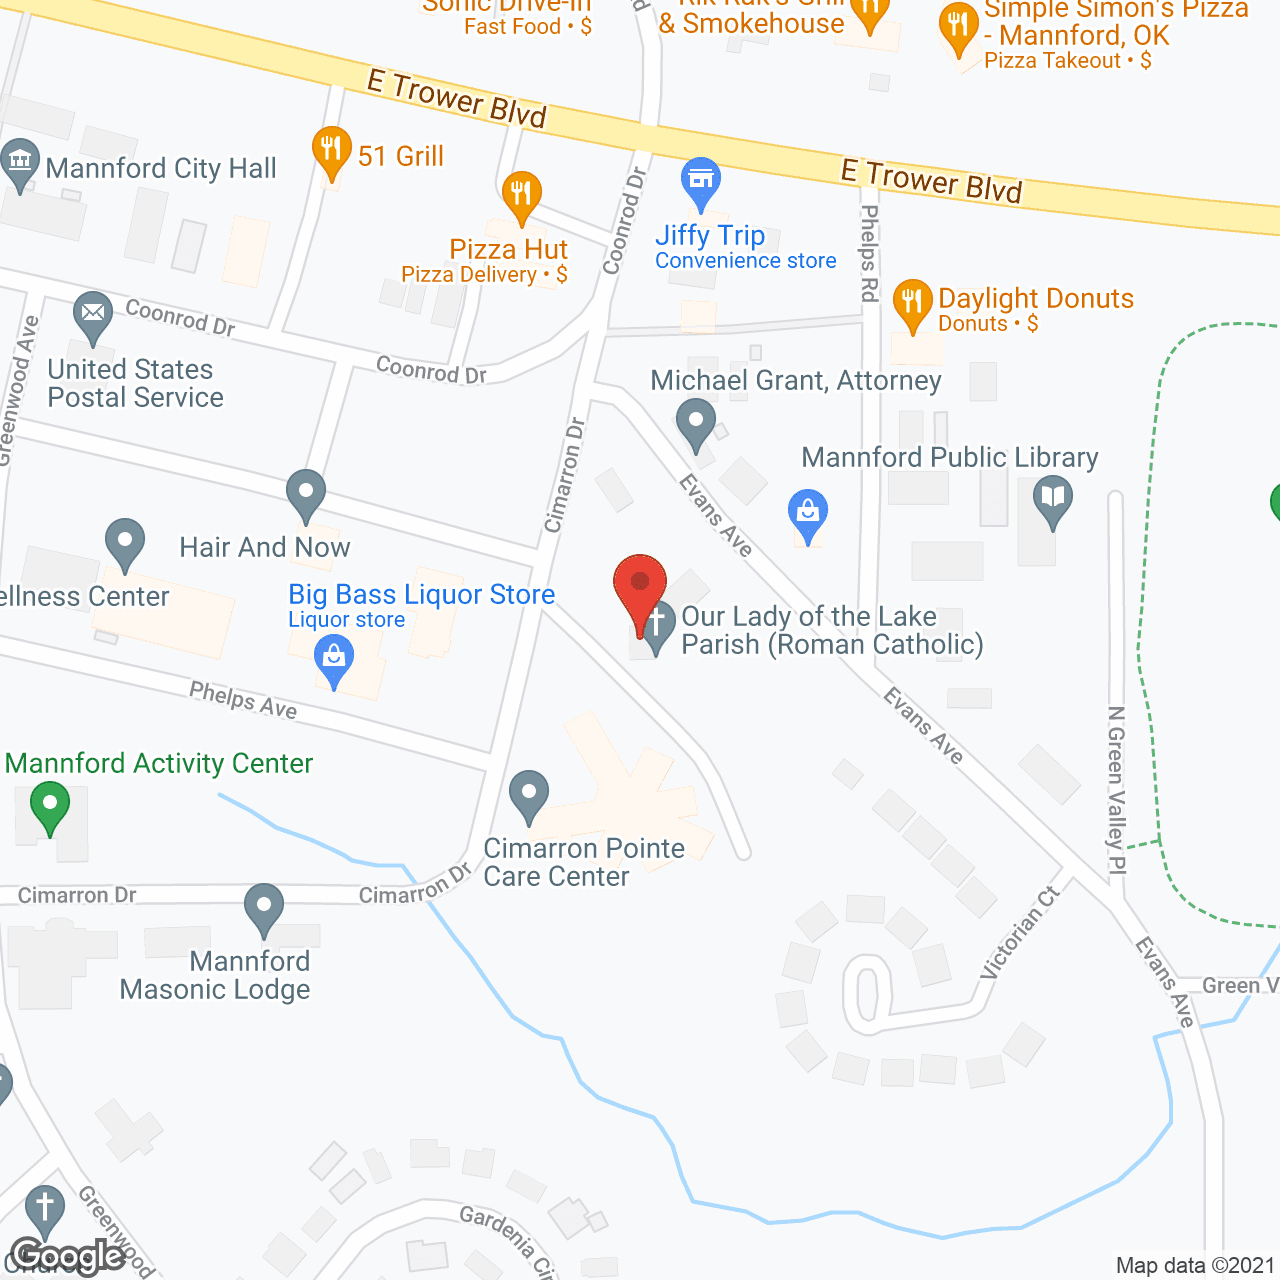 Cimarron Pointe Care Center in google map